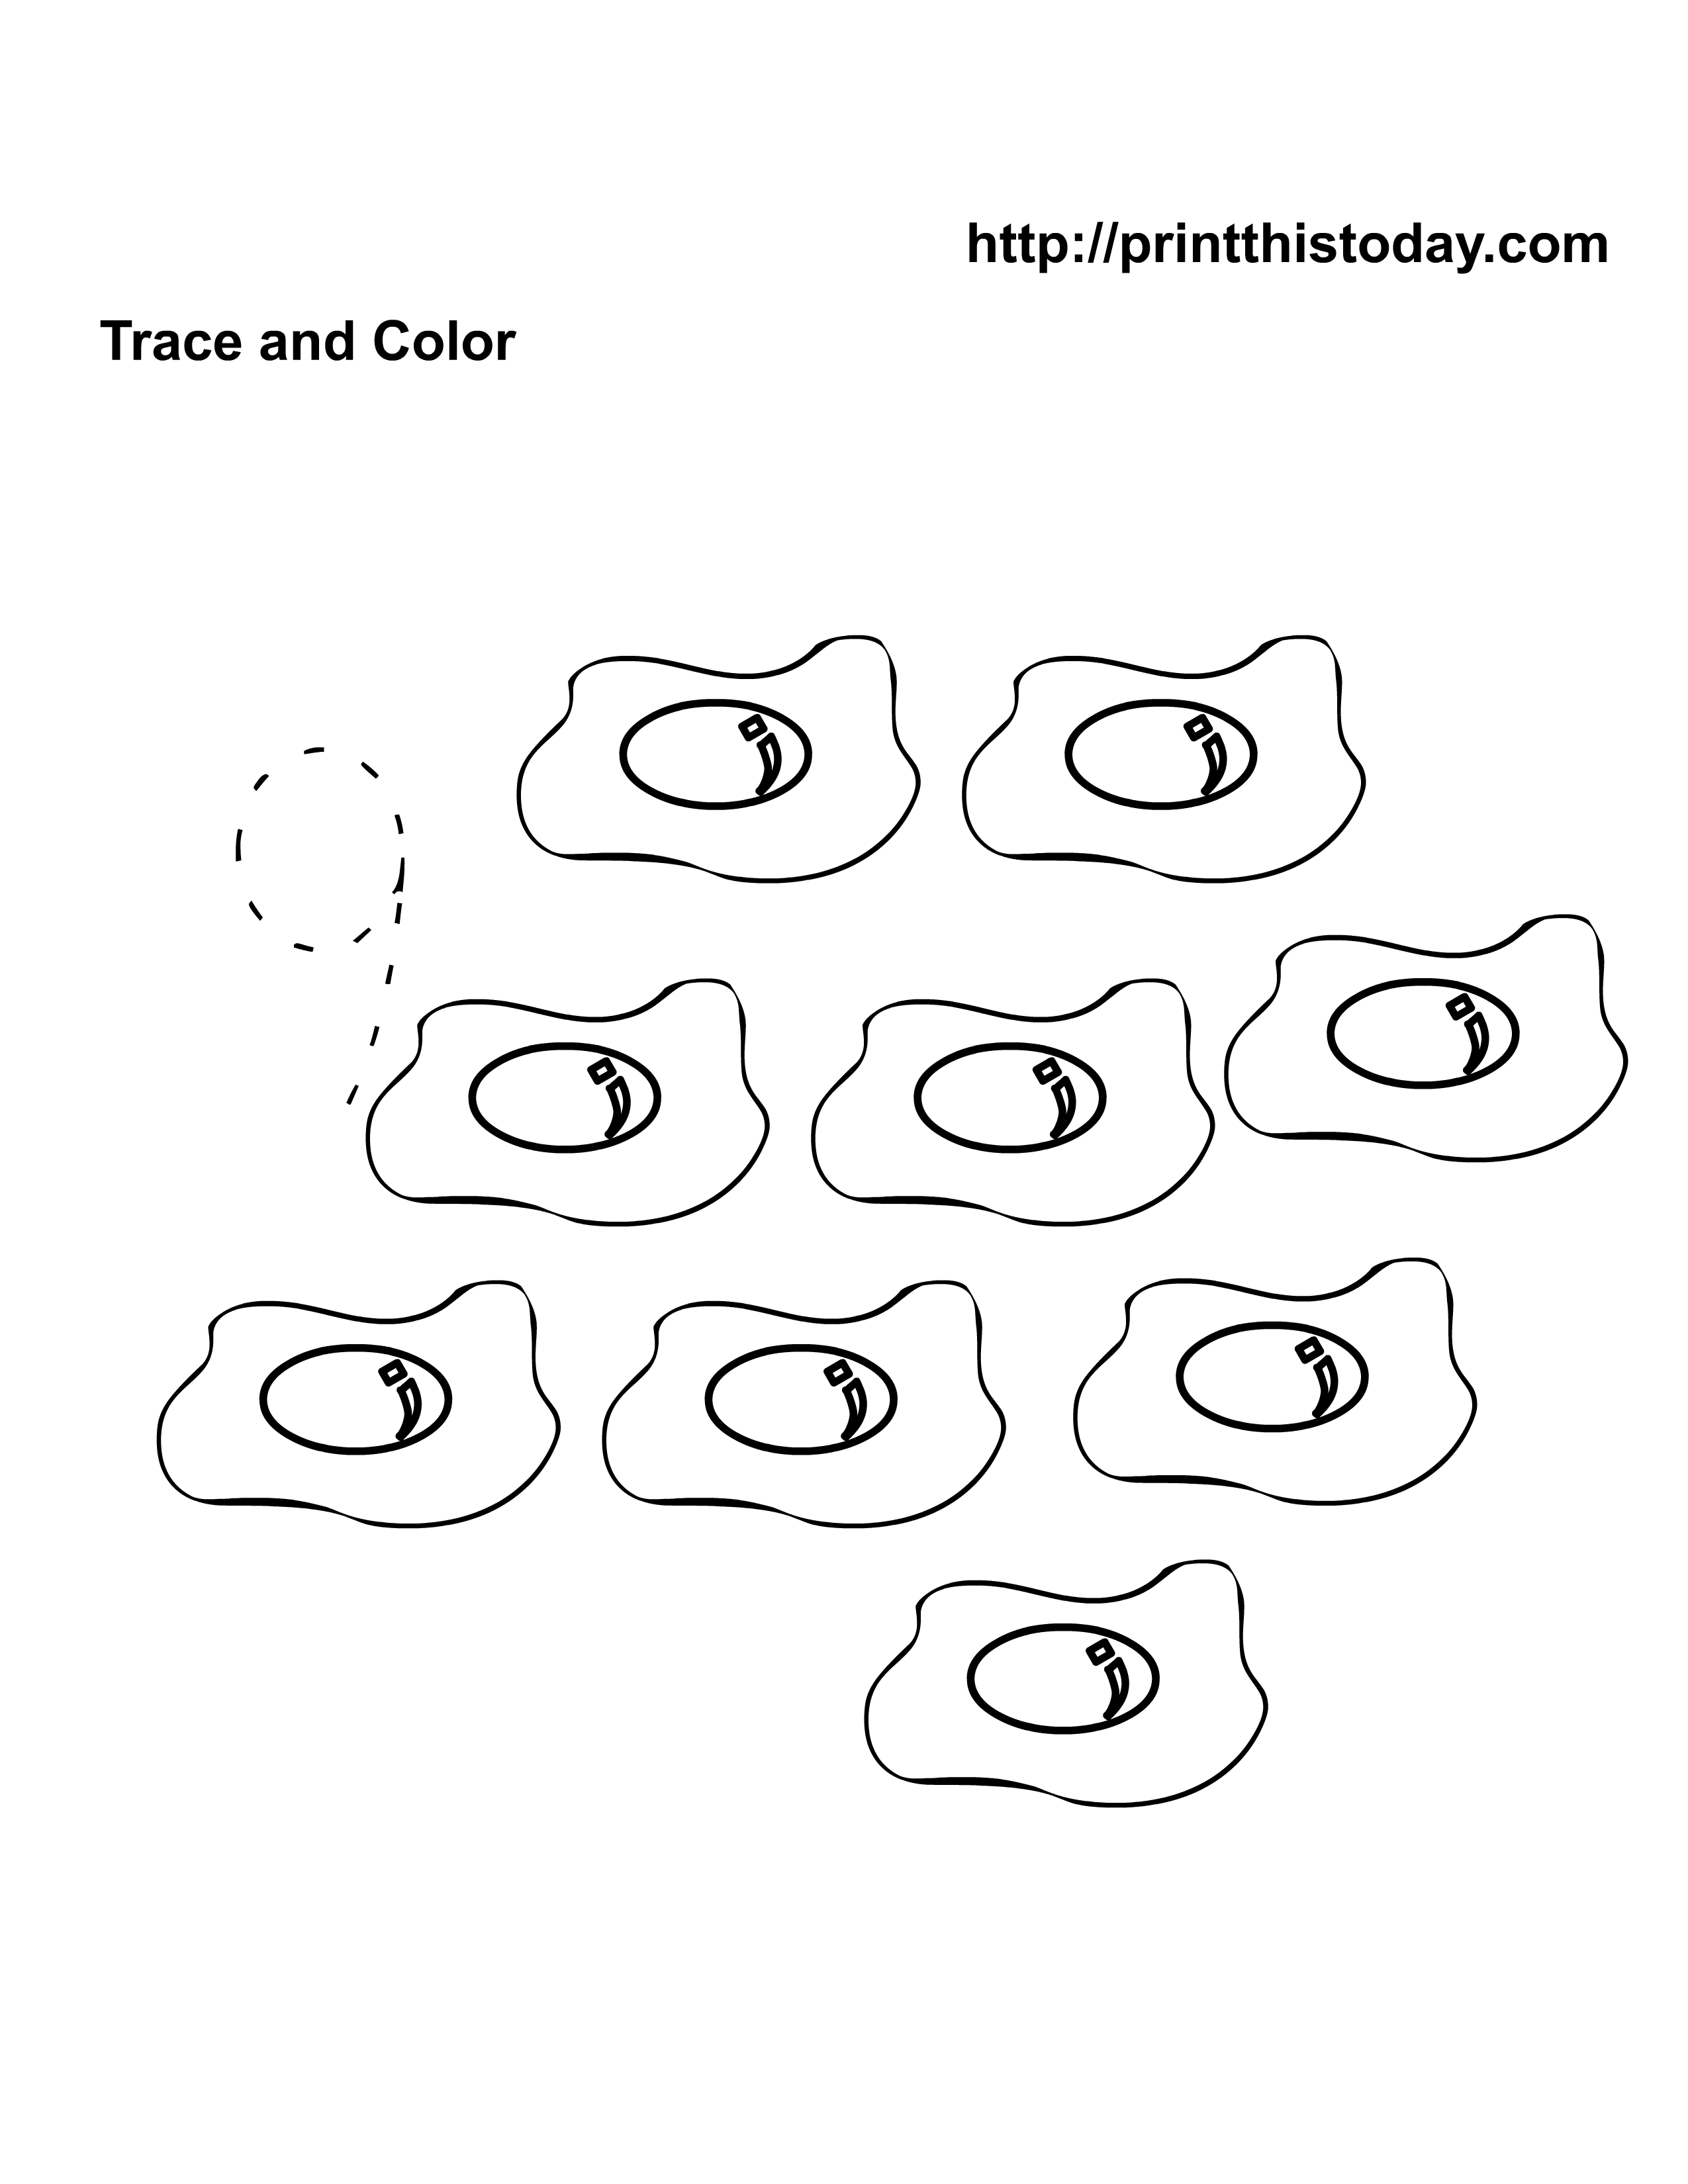 Fun Kindergarten Math Worksheets Image